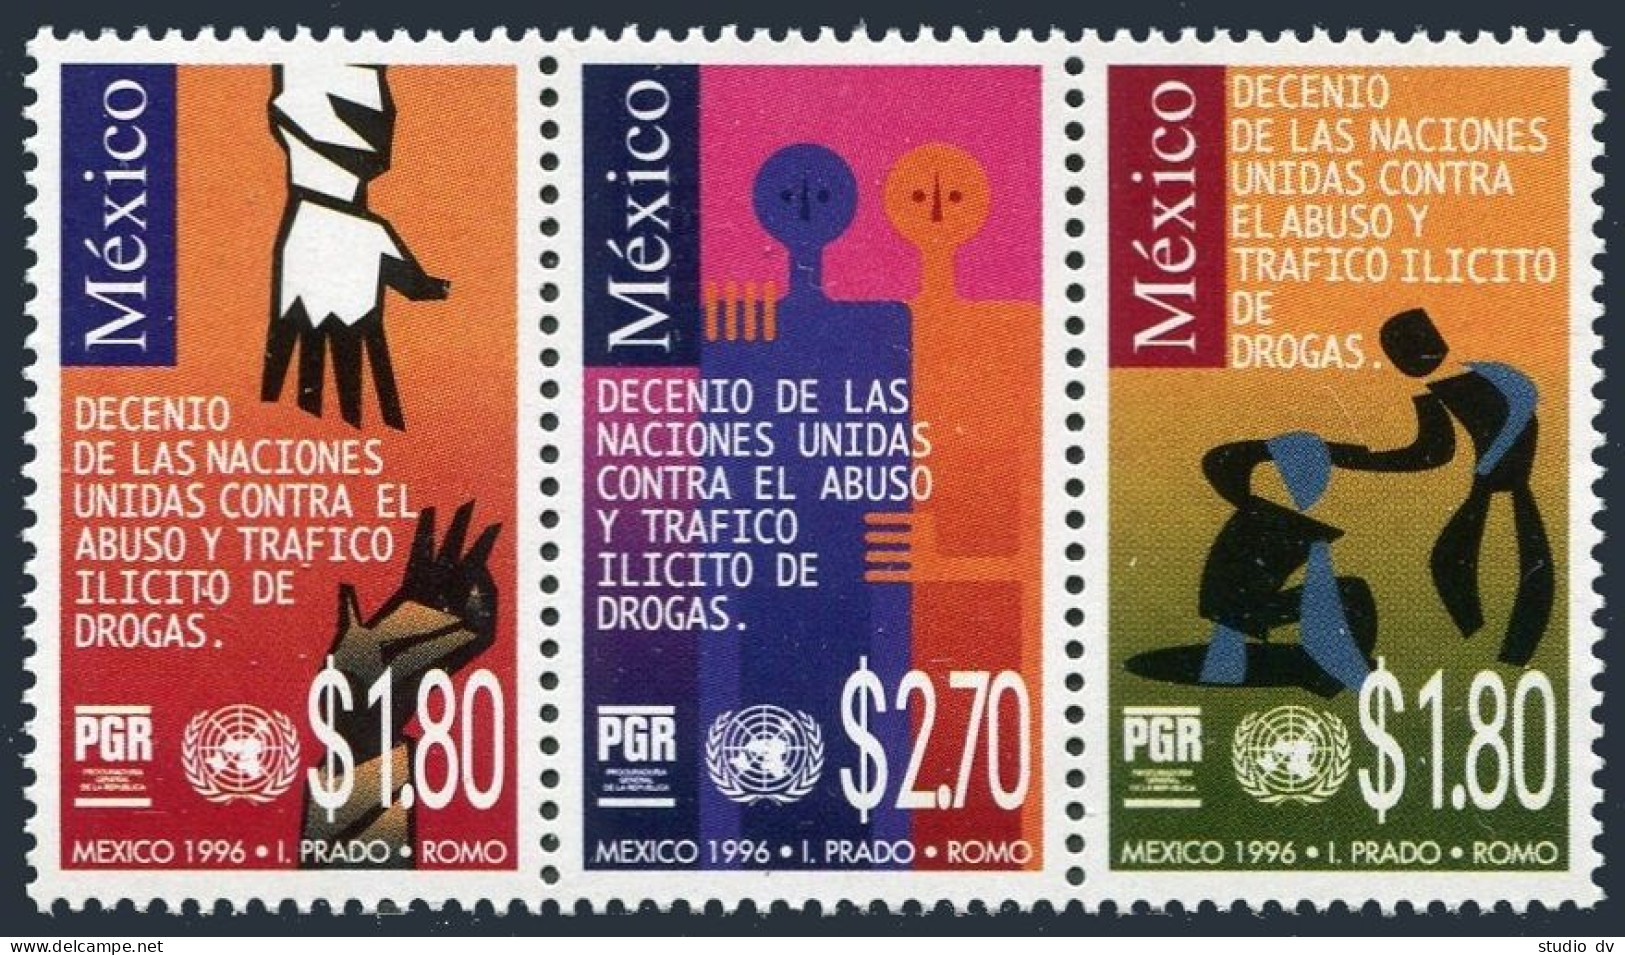 Mexico 1984 Ac Strip, MNH. Mi 2547-2549. Decade Of UN Against Drag Abuse, 1996. - Mexico